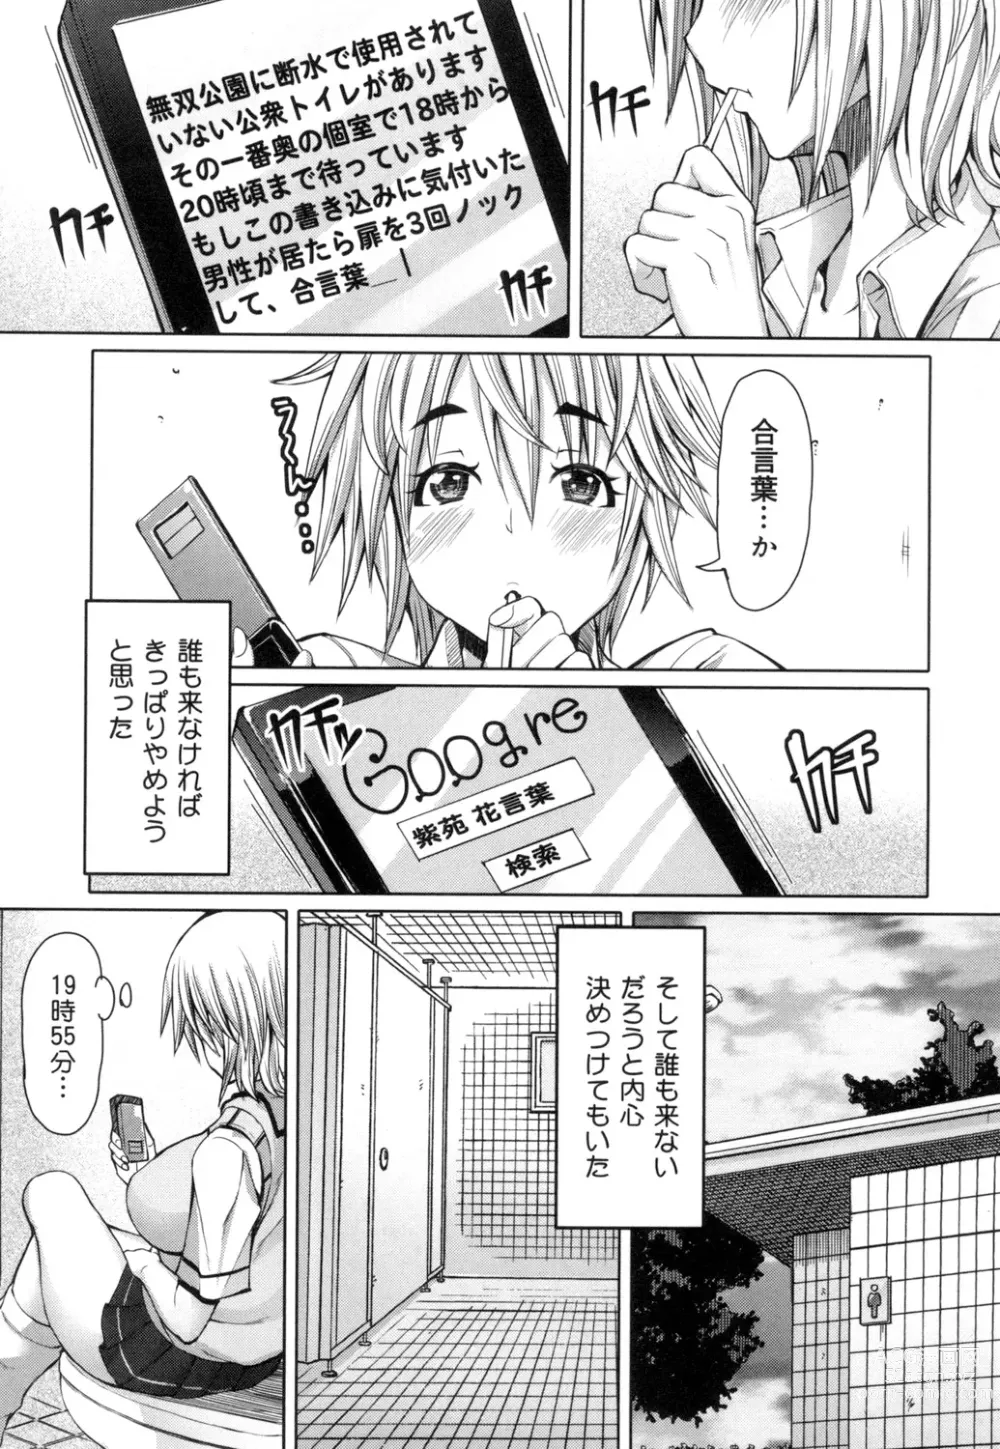 Page 24 of manga Kagome no Inyoku - After School Lady